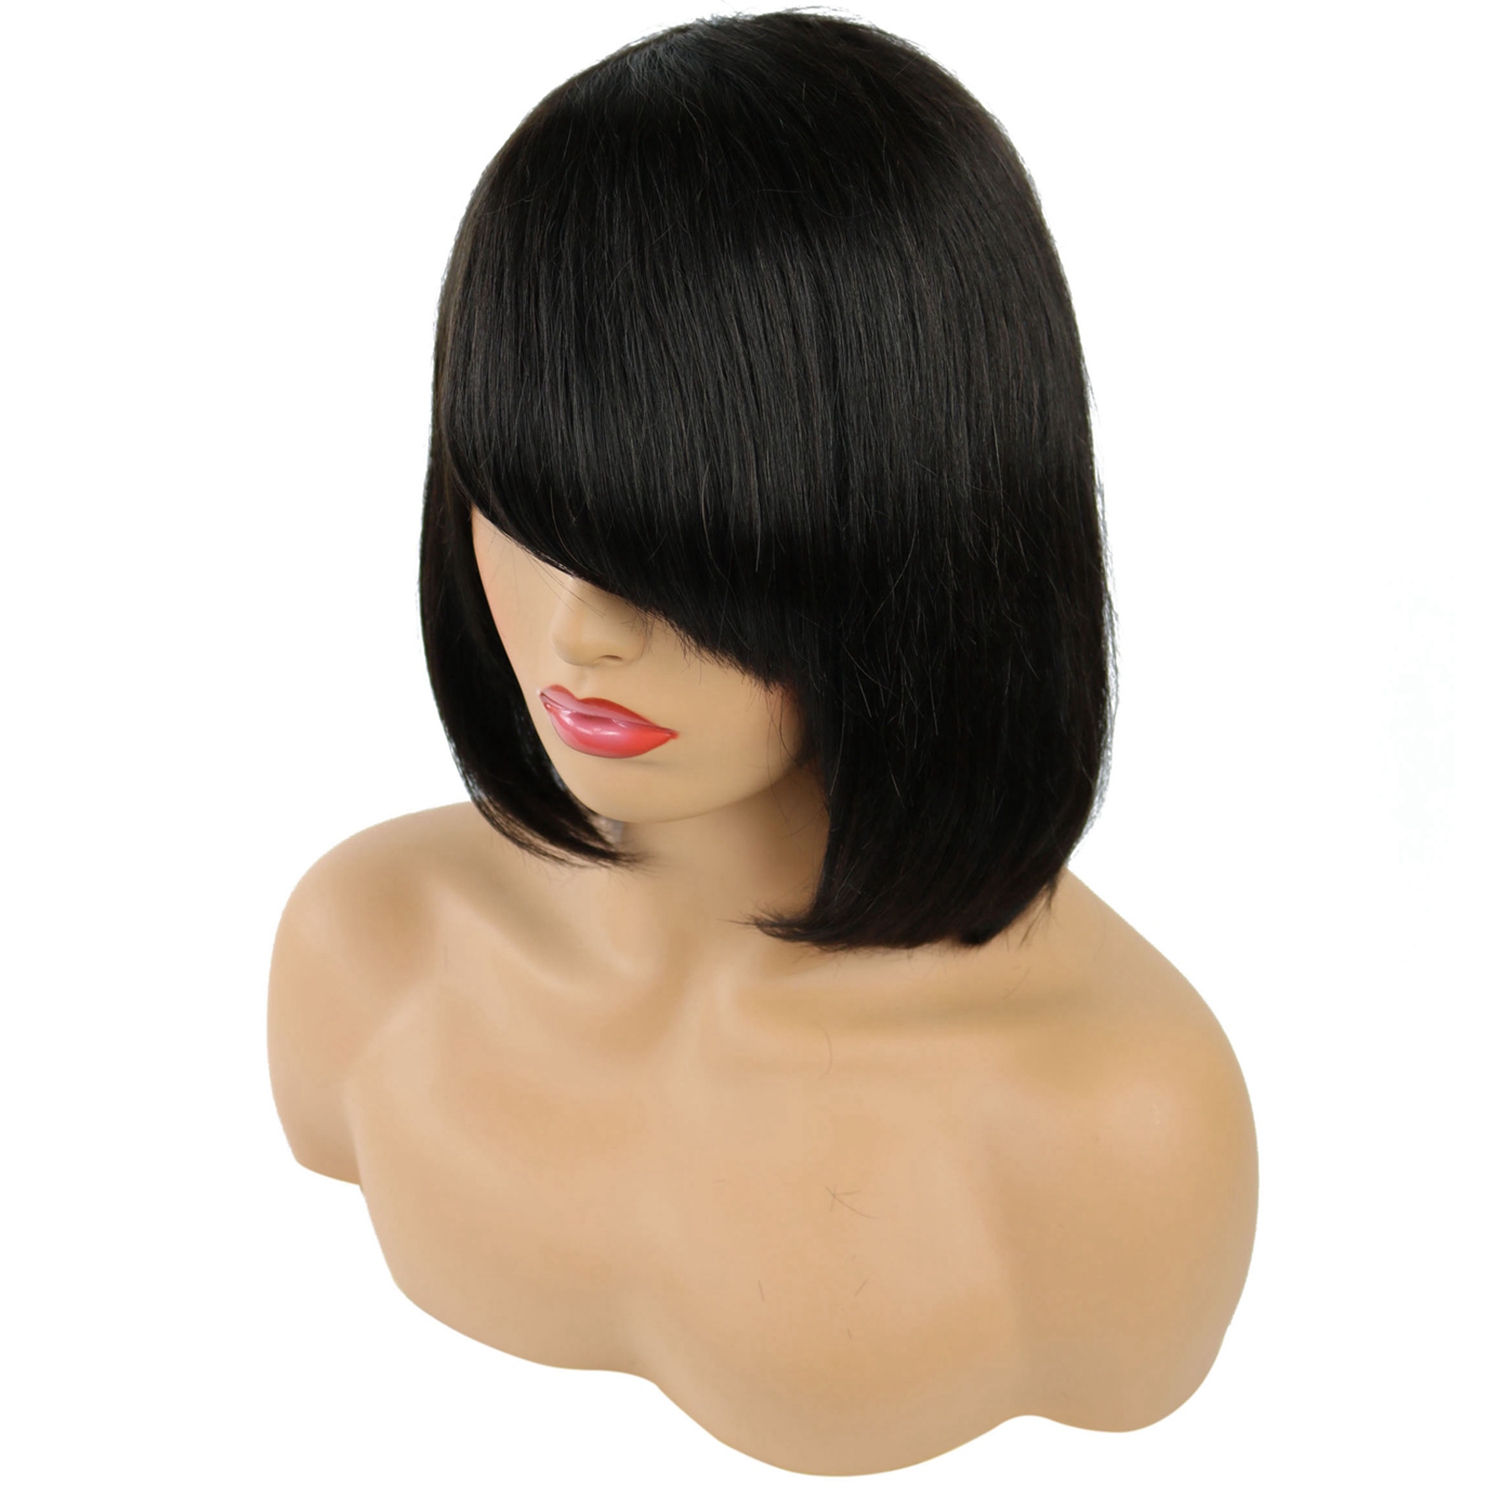 Taraji Henson Short Straight Bob Hair Style Human Hair Capless Wigs 10 Inches